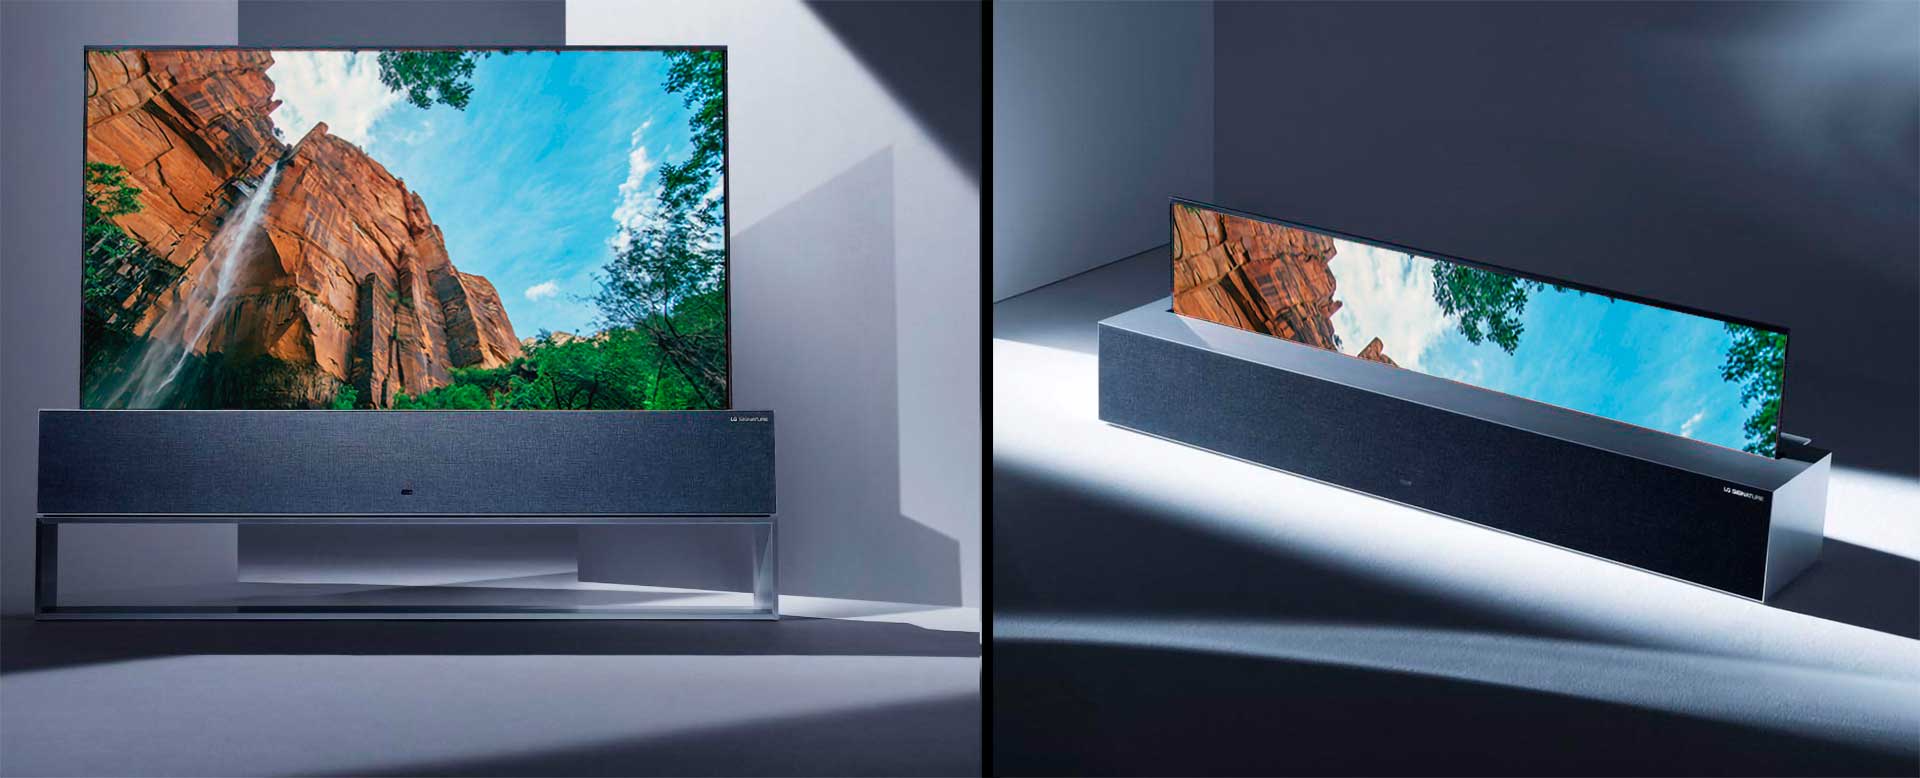 Новый телевизор видео. Телевизор LG Signature 65 OLED R 2021. LG Signature OLED R. Сворачивающийся телевизор LG OLED R.. LG Signature телевизор сворачивающийся.